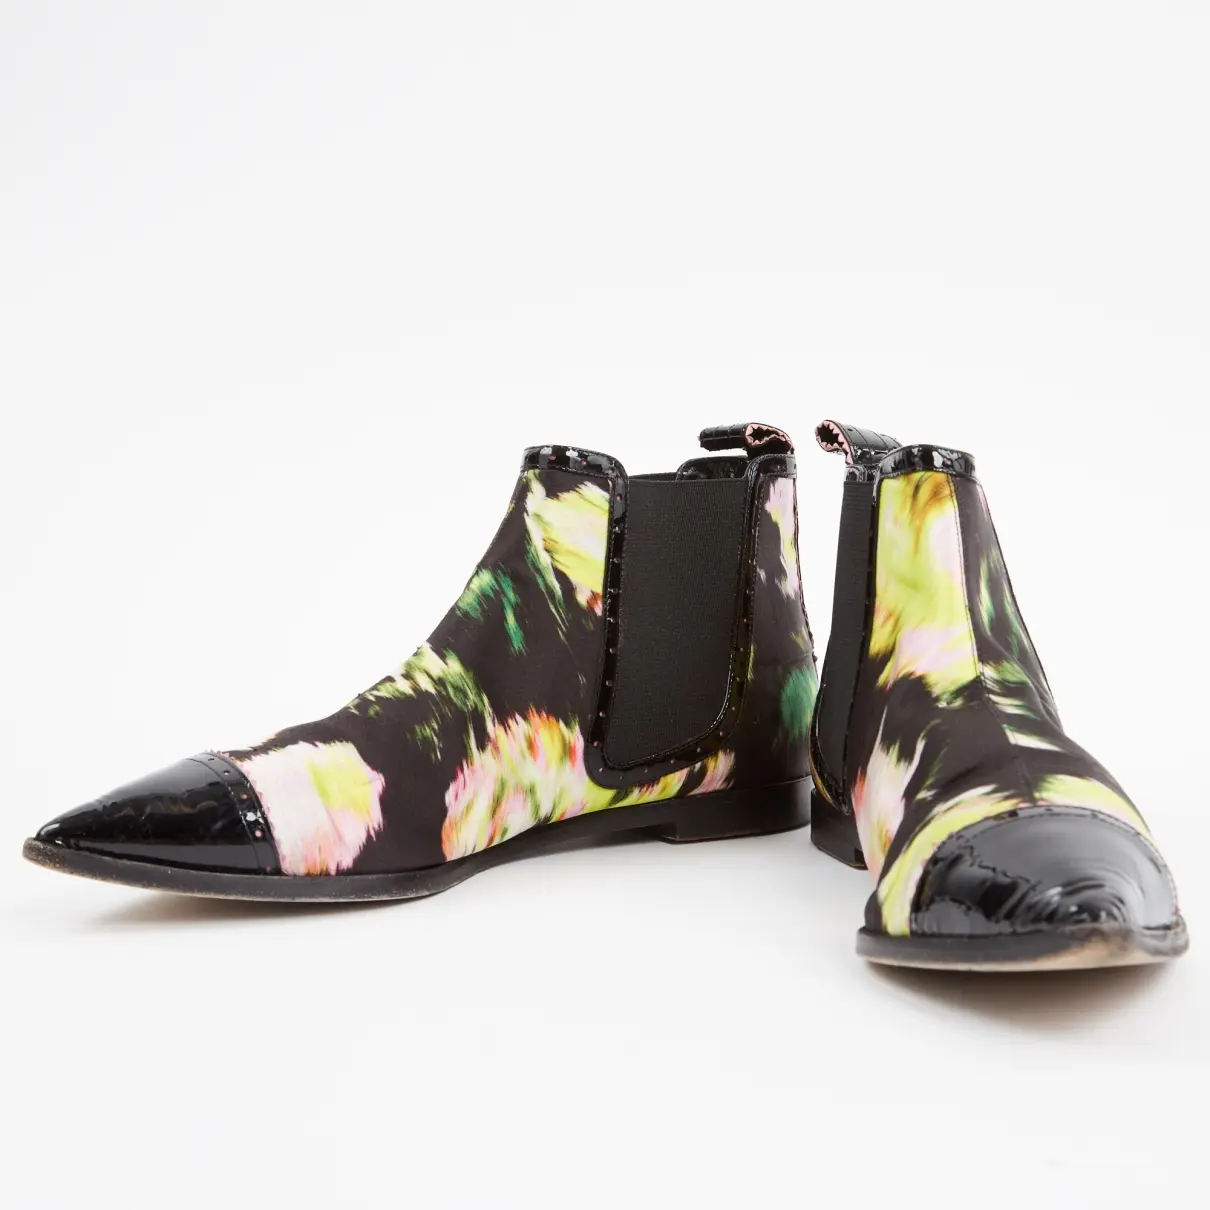 Nicholas Kirkwood Cloth ankle boots for sale